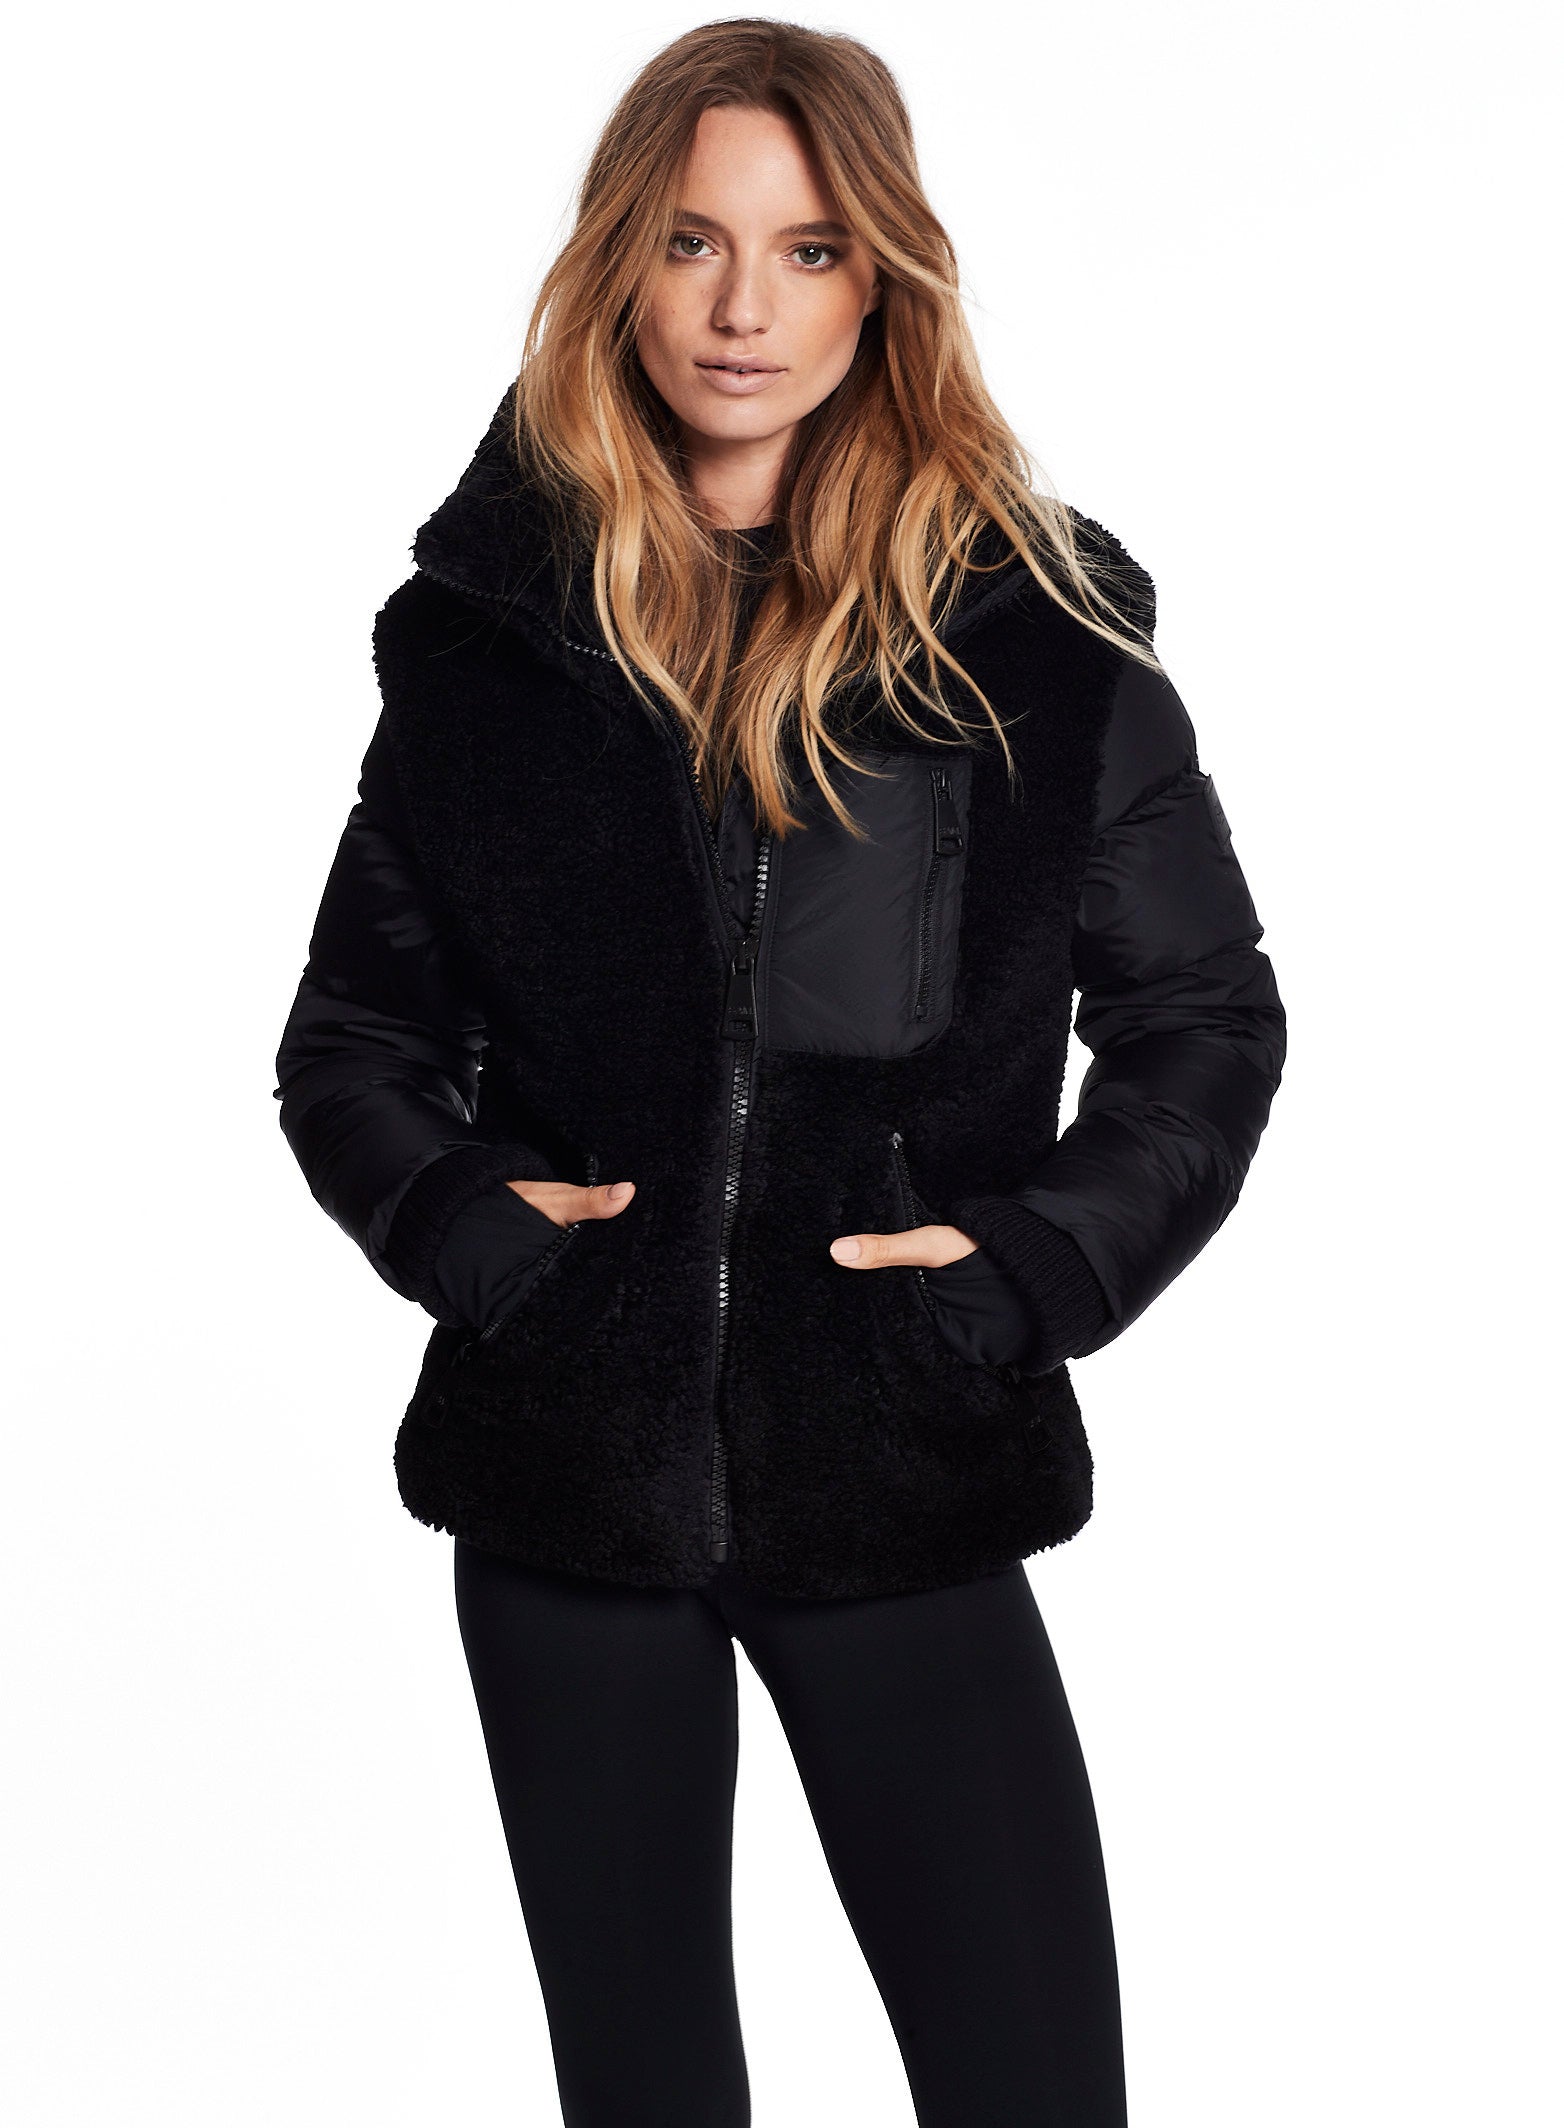 Wild Horses Black Reversible Puffer Jacket – Swoon Boutique Lafayette